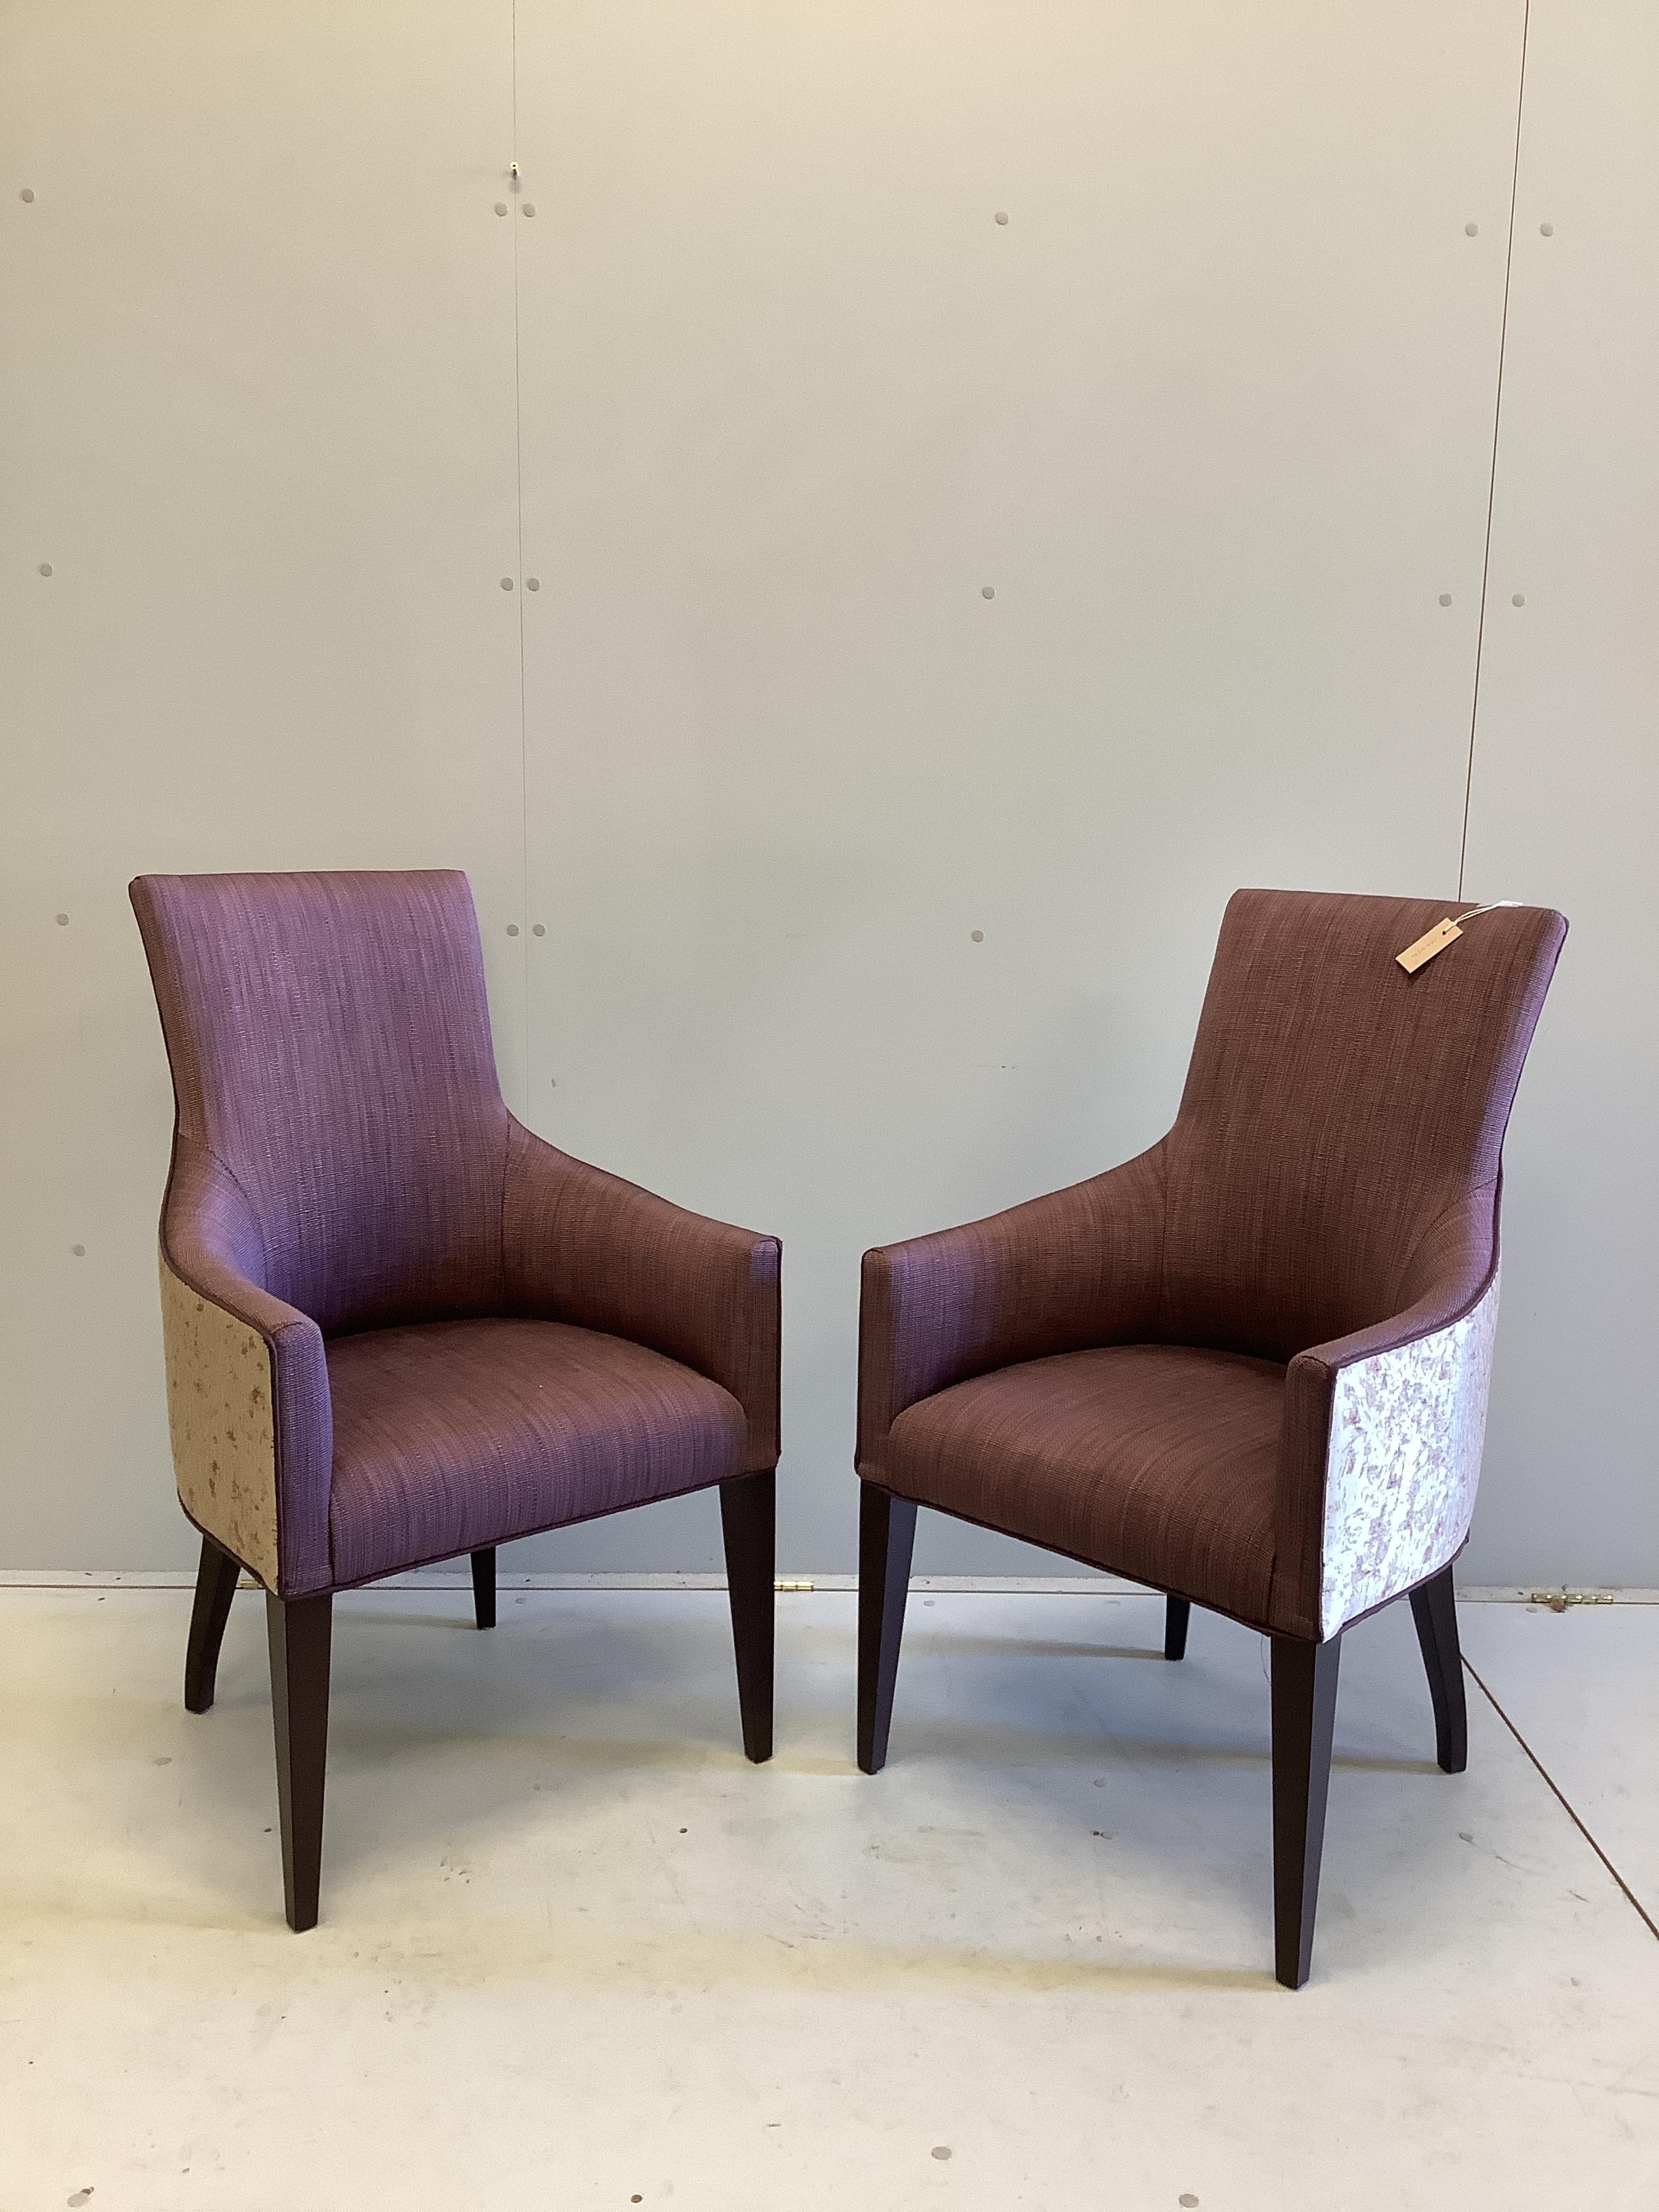 A pair of Claverton carver chairs by Ben Whistler, Chapel Street, upholstered in Dedar Jasper Myrtille and Evitavonni Verona Oro fabrics, width 58cm, depth 60cm, height 97cm